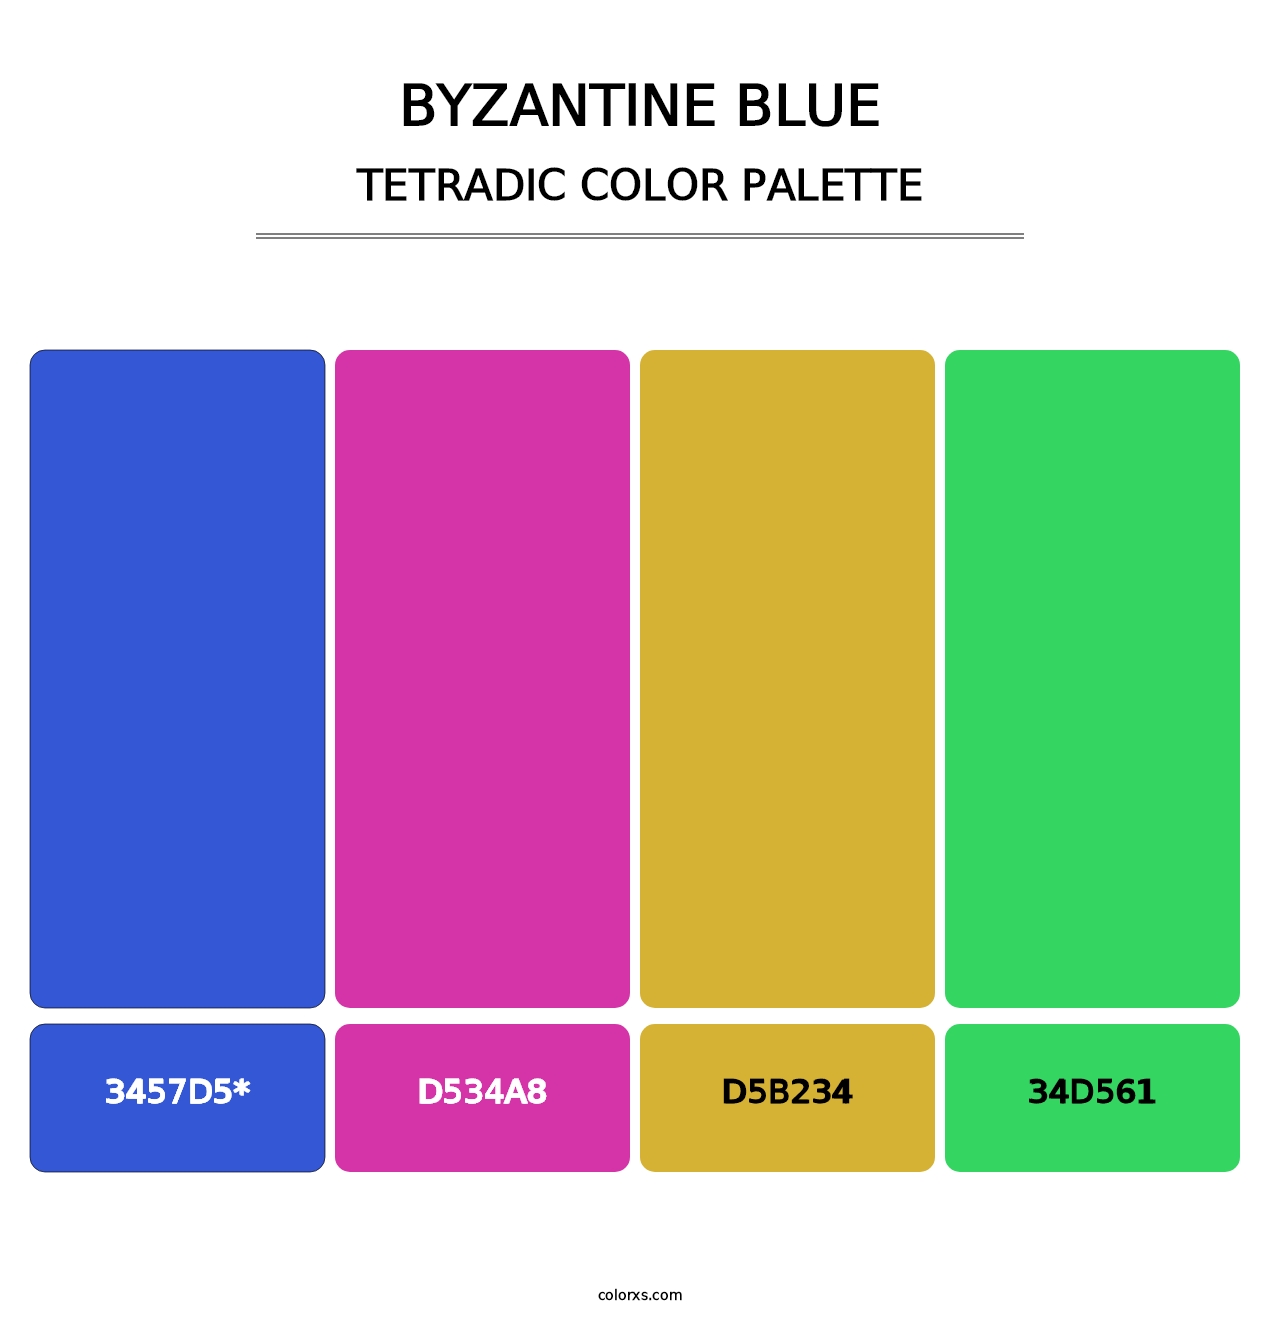 Byzantine Blue - Tetradic Color Palette